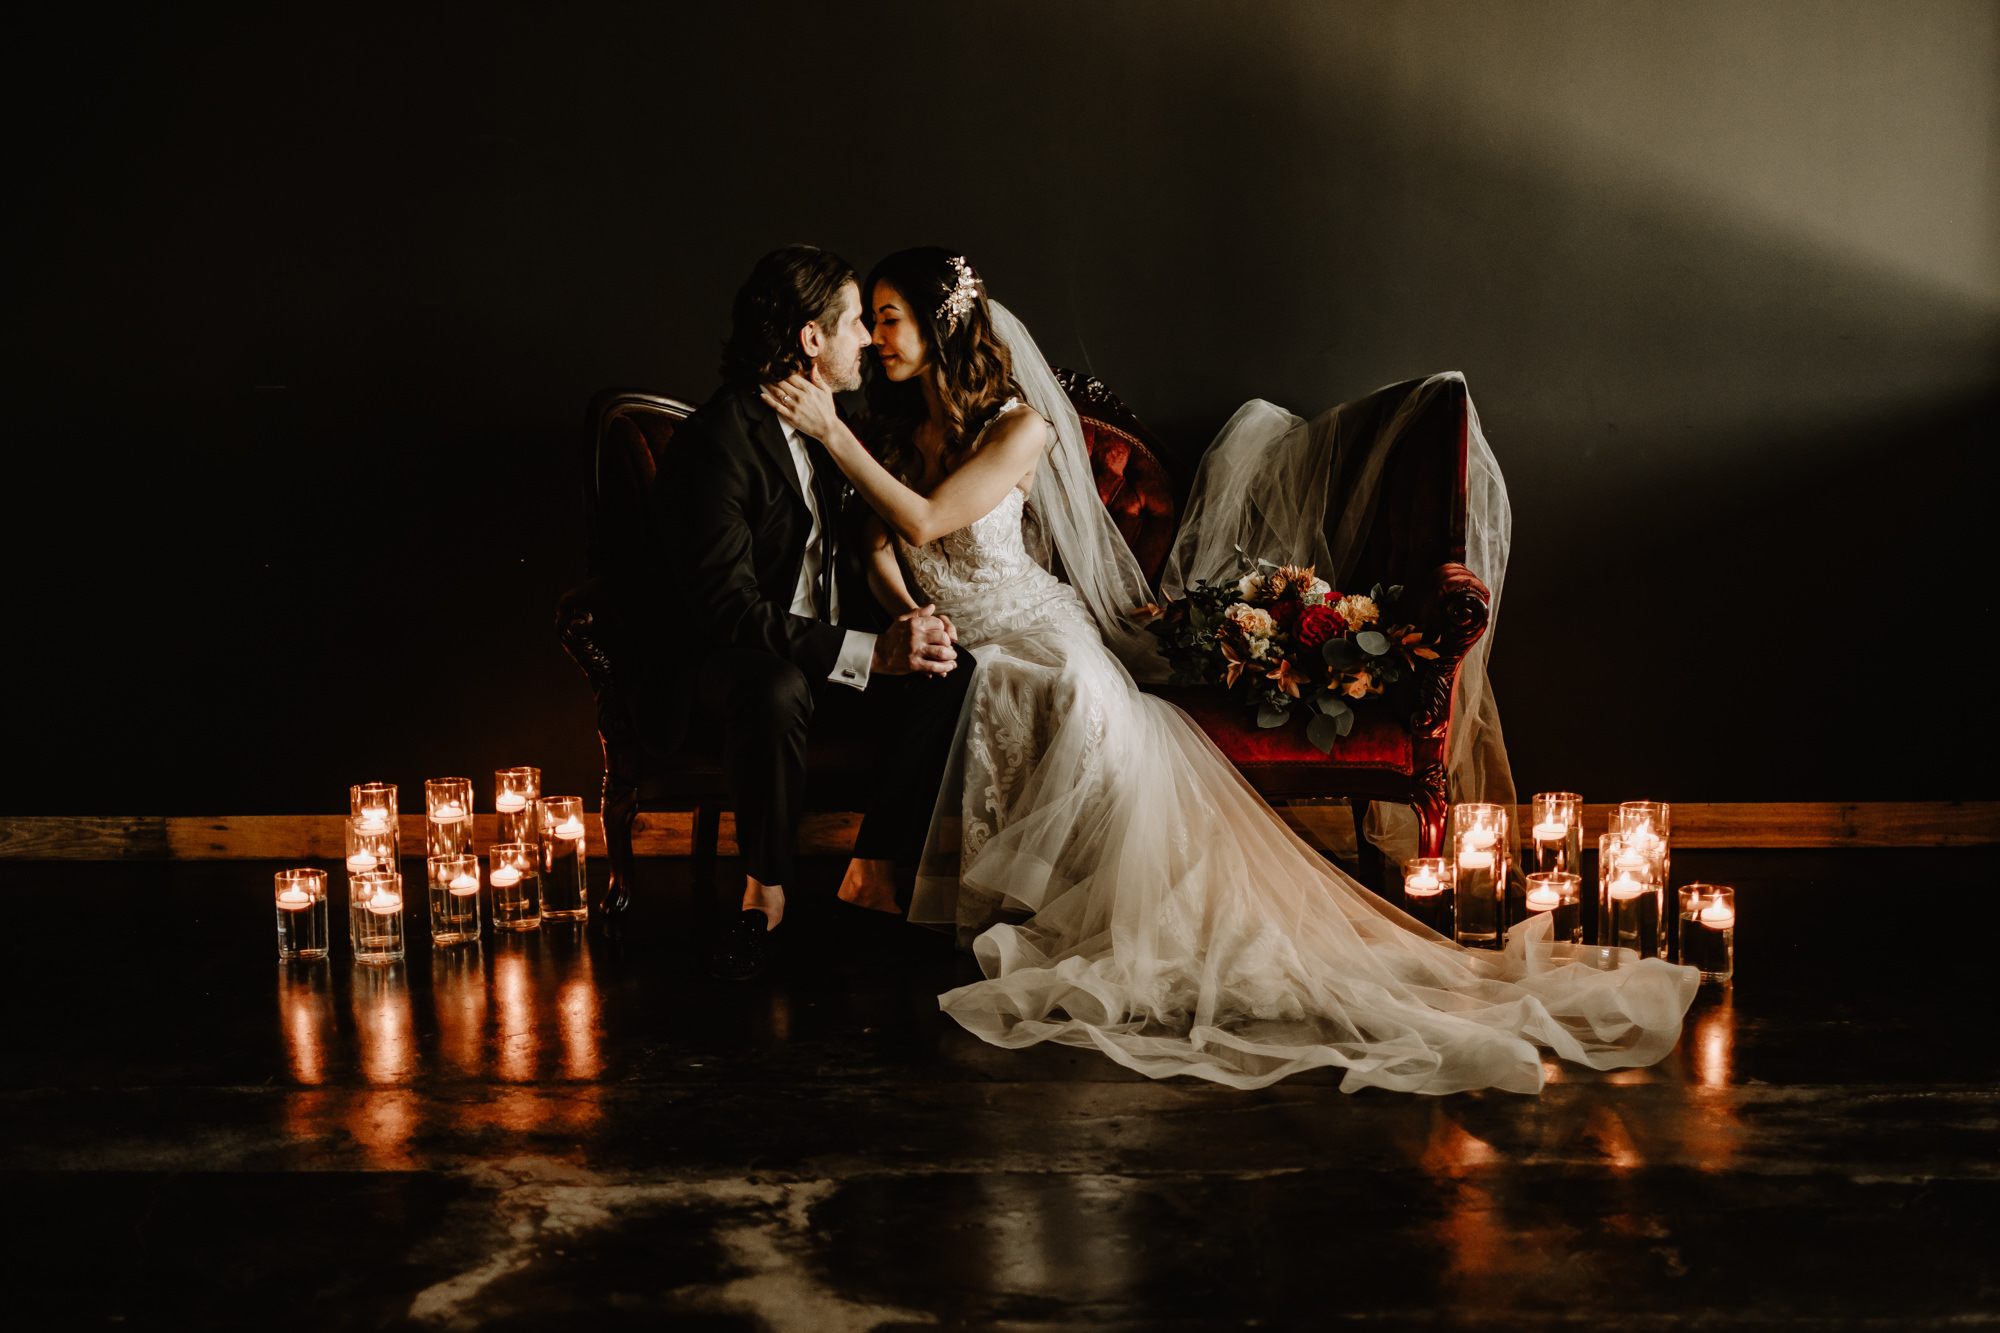 Romantic Dark and Moody Candlelit Wedding Portrait